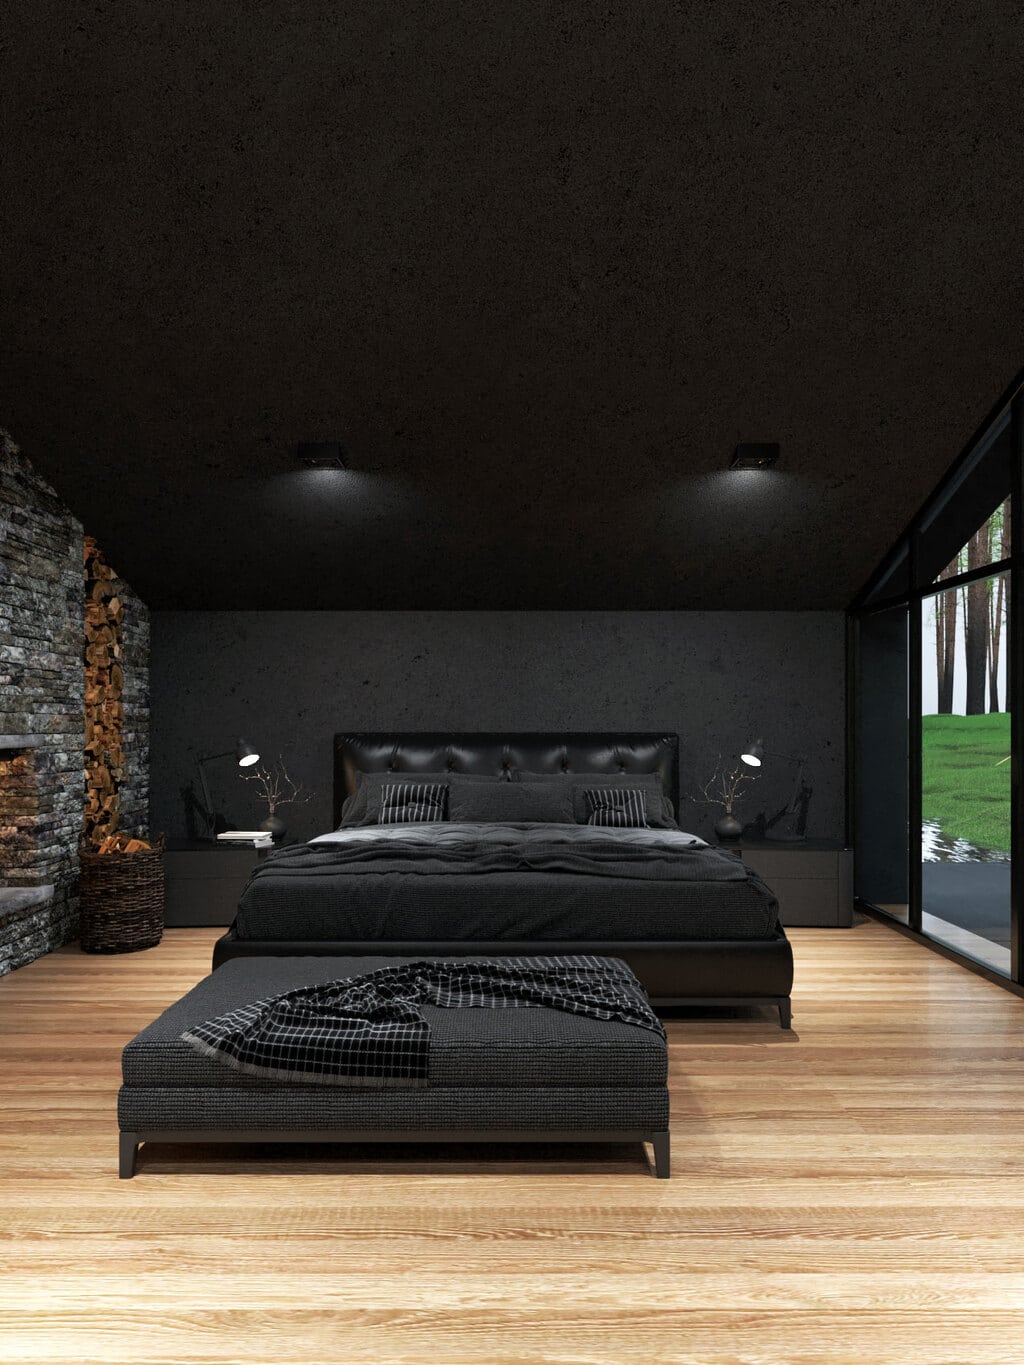 Black villa bedroom interior design